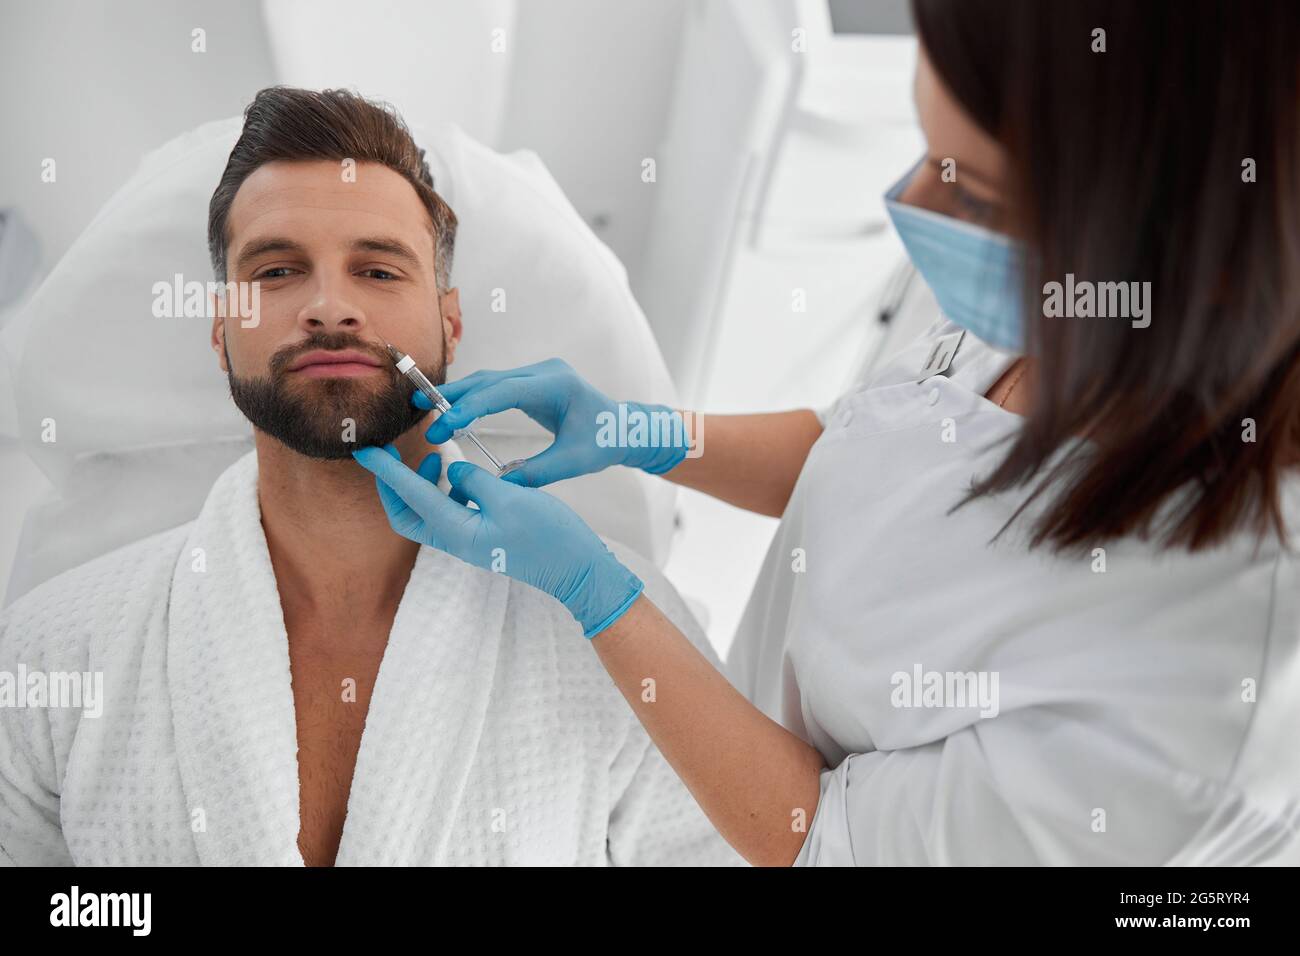 Happy man with beard undergoes nasolabial fold filler procedure in cosmetology clinic Stock Photo